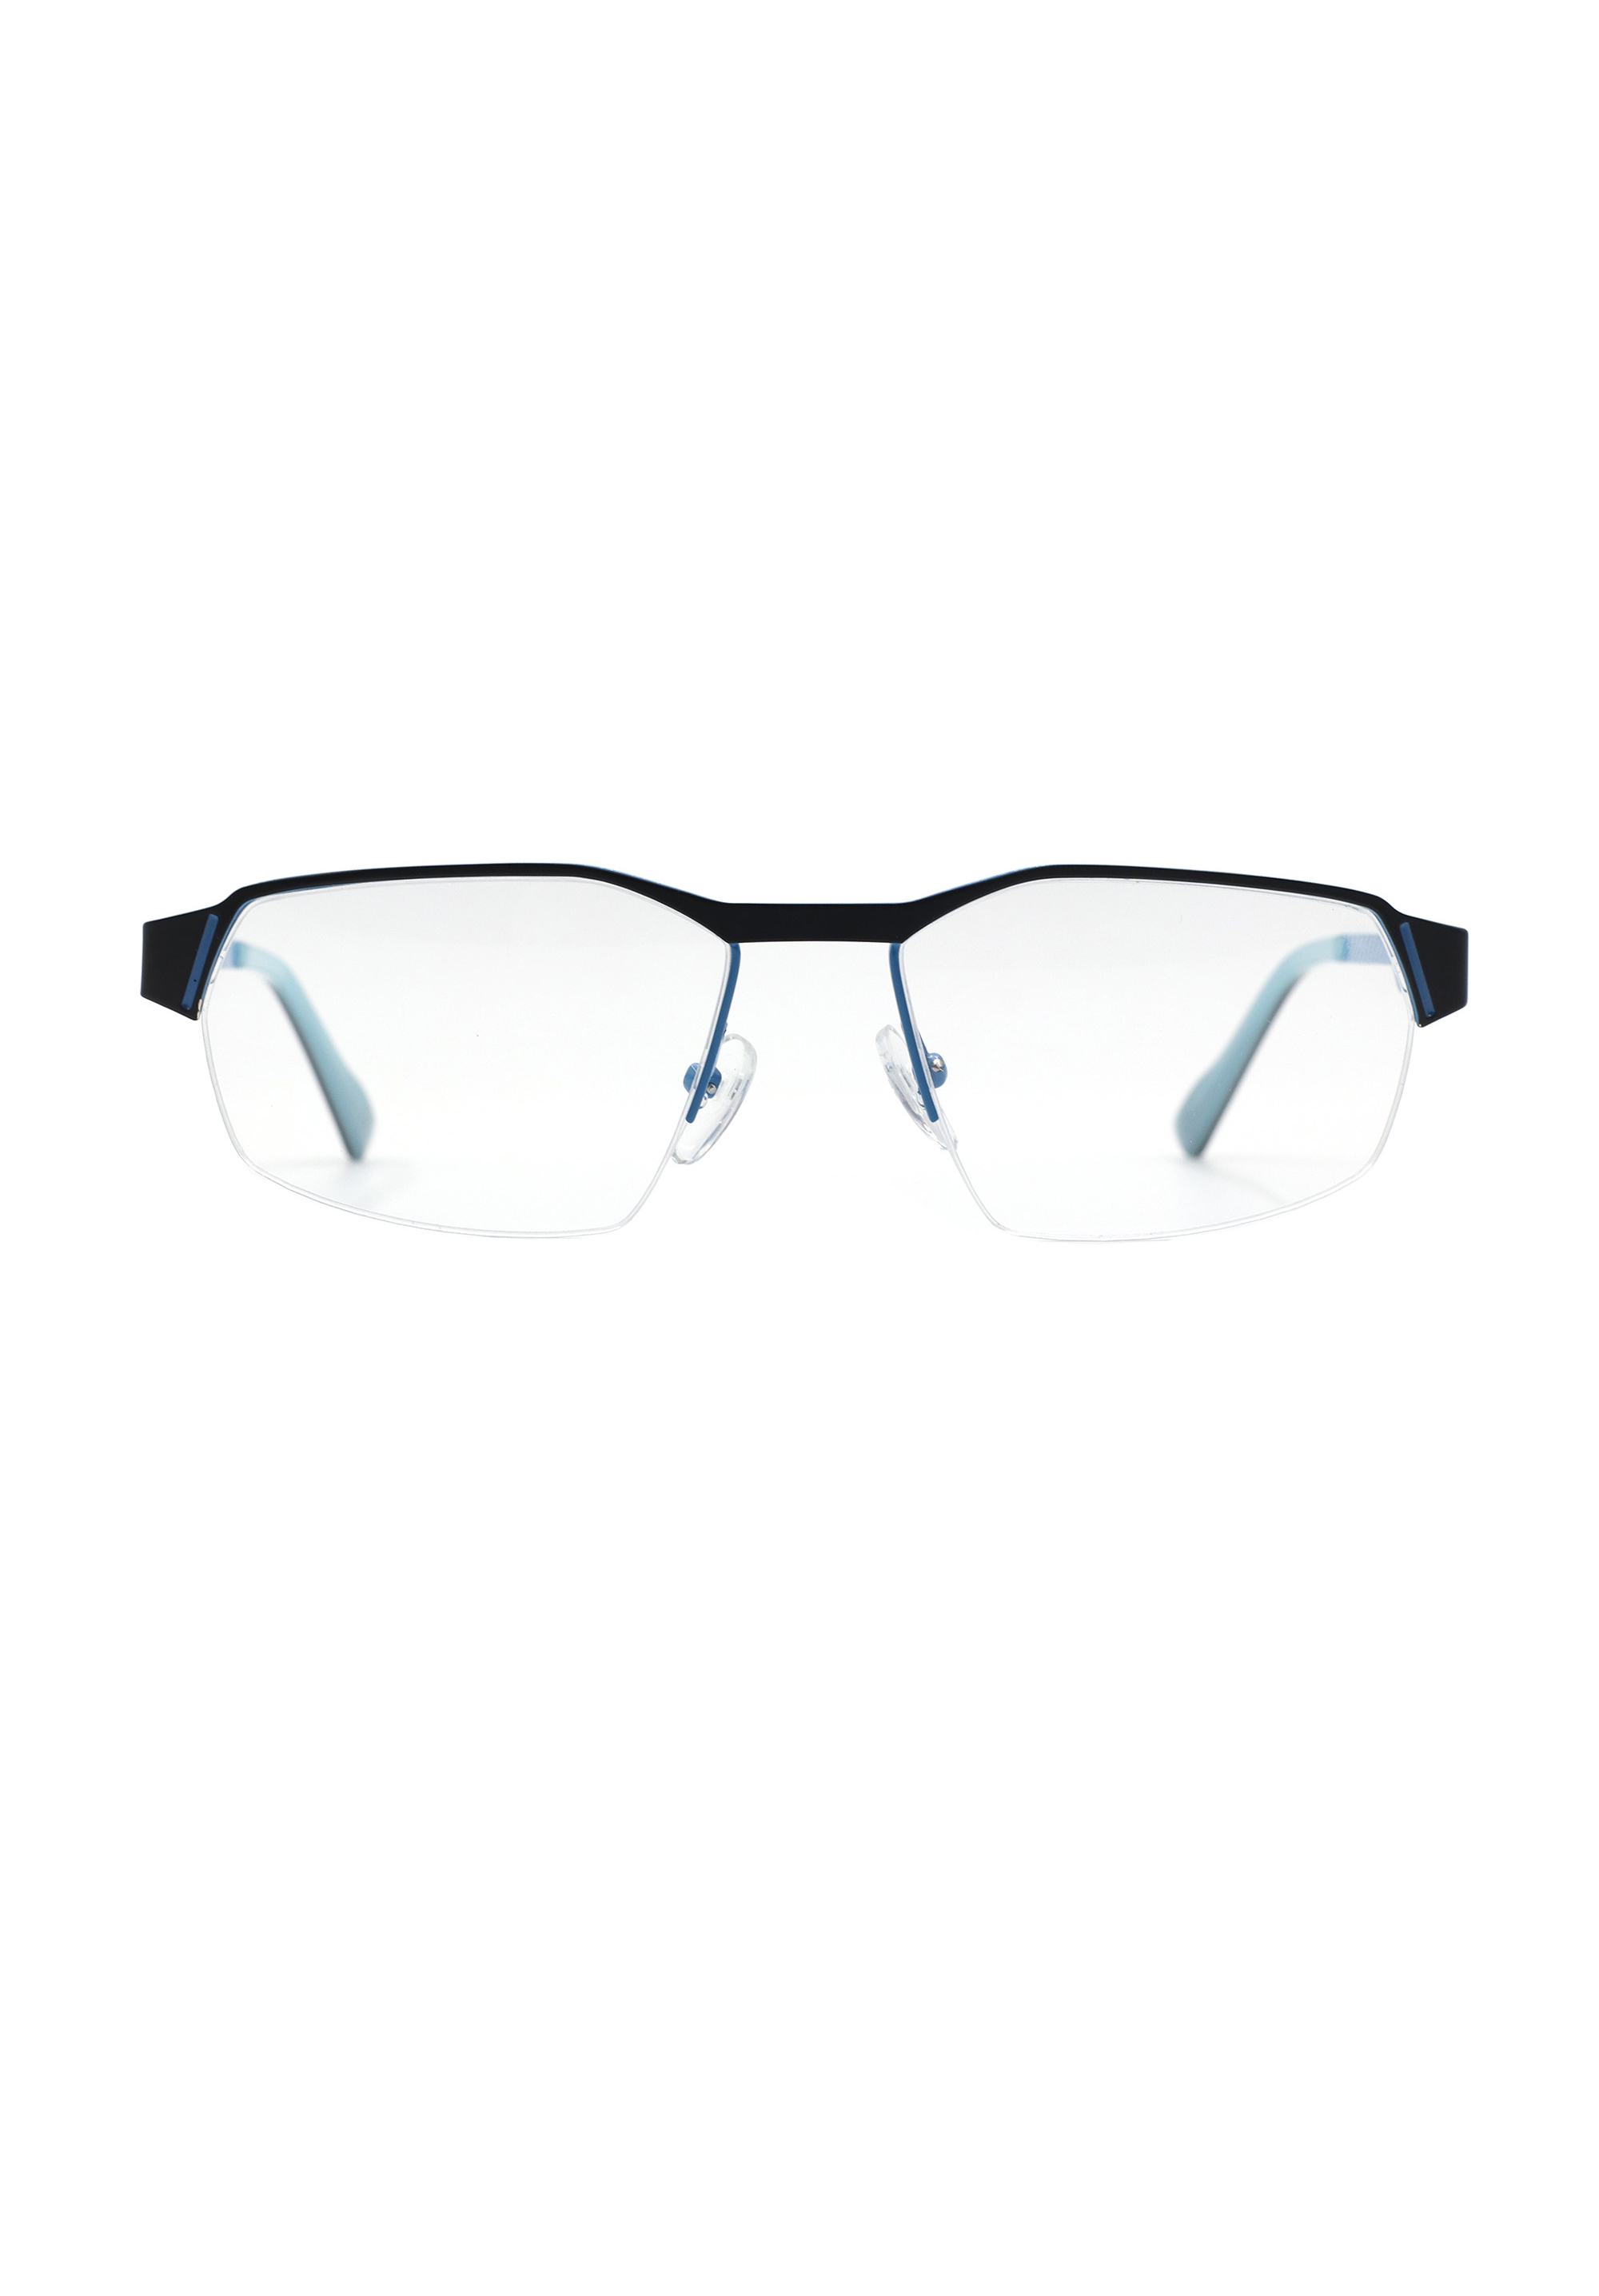 Male fashion optical metal glasses Featured Image